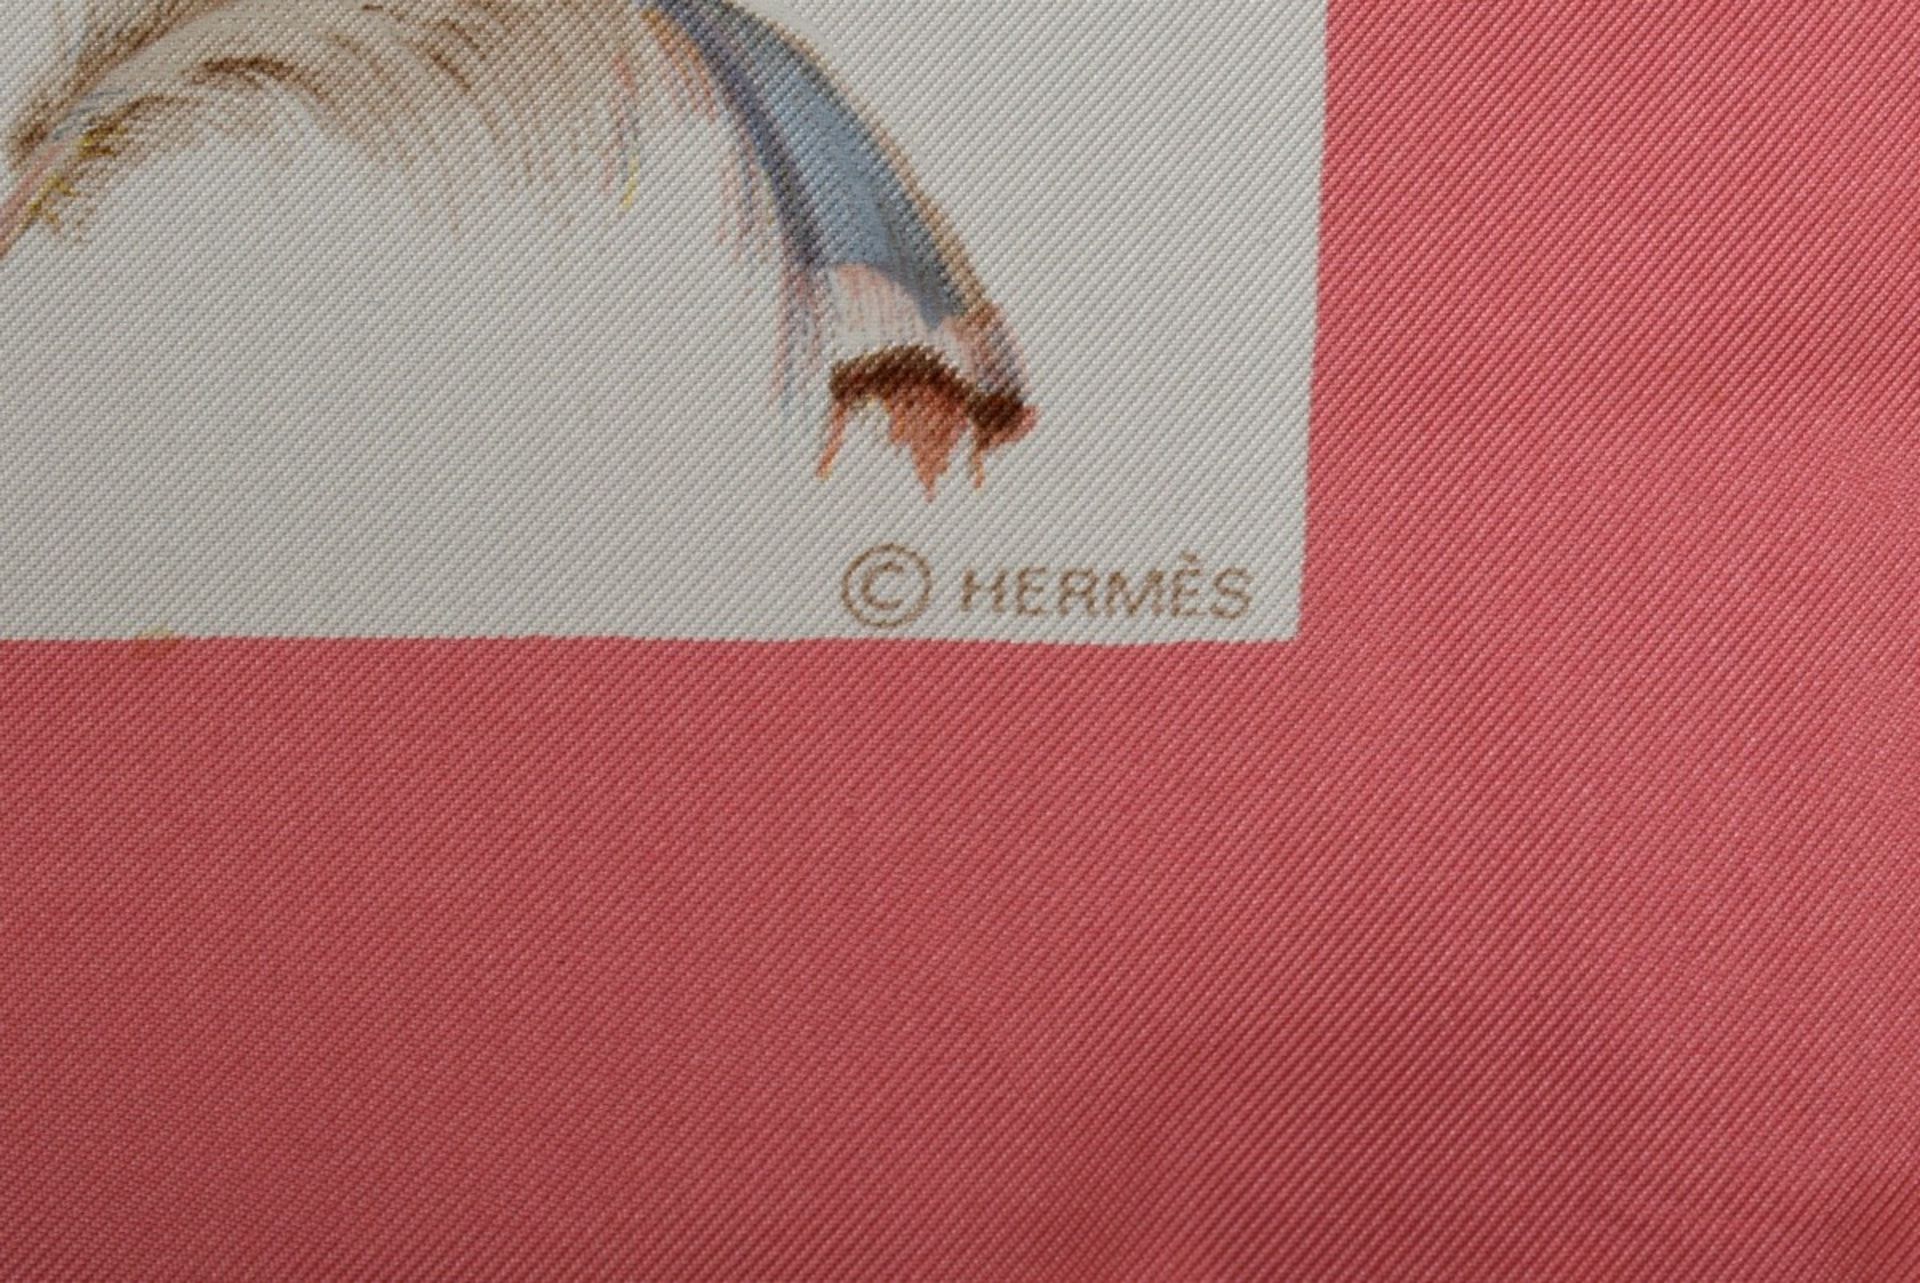 Hermès silk carré "Plumes" in pink, design: Henri de Linares 1953, rolled edge, 90x90cm - Image 4 of 5